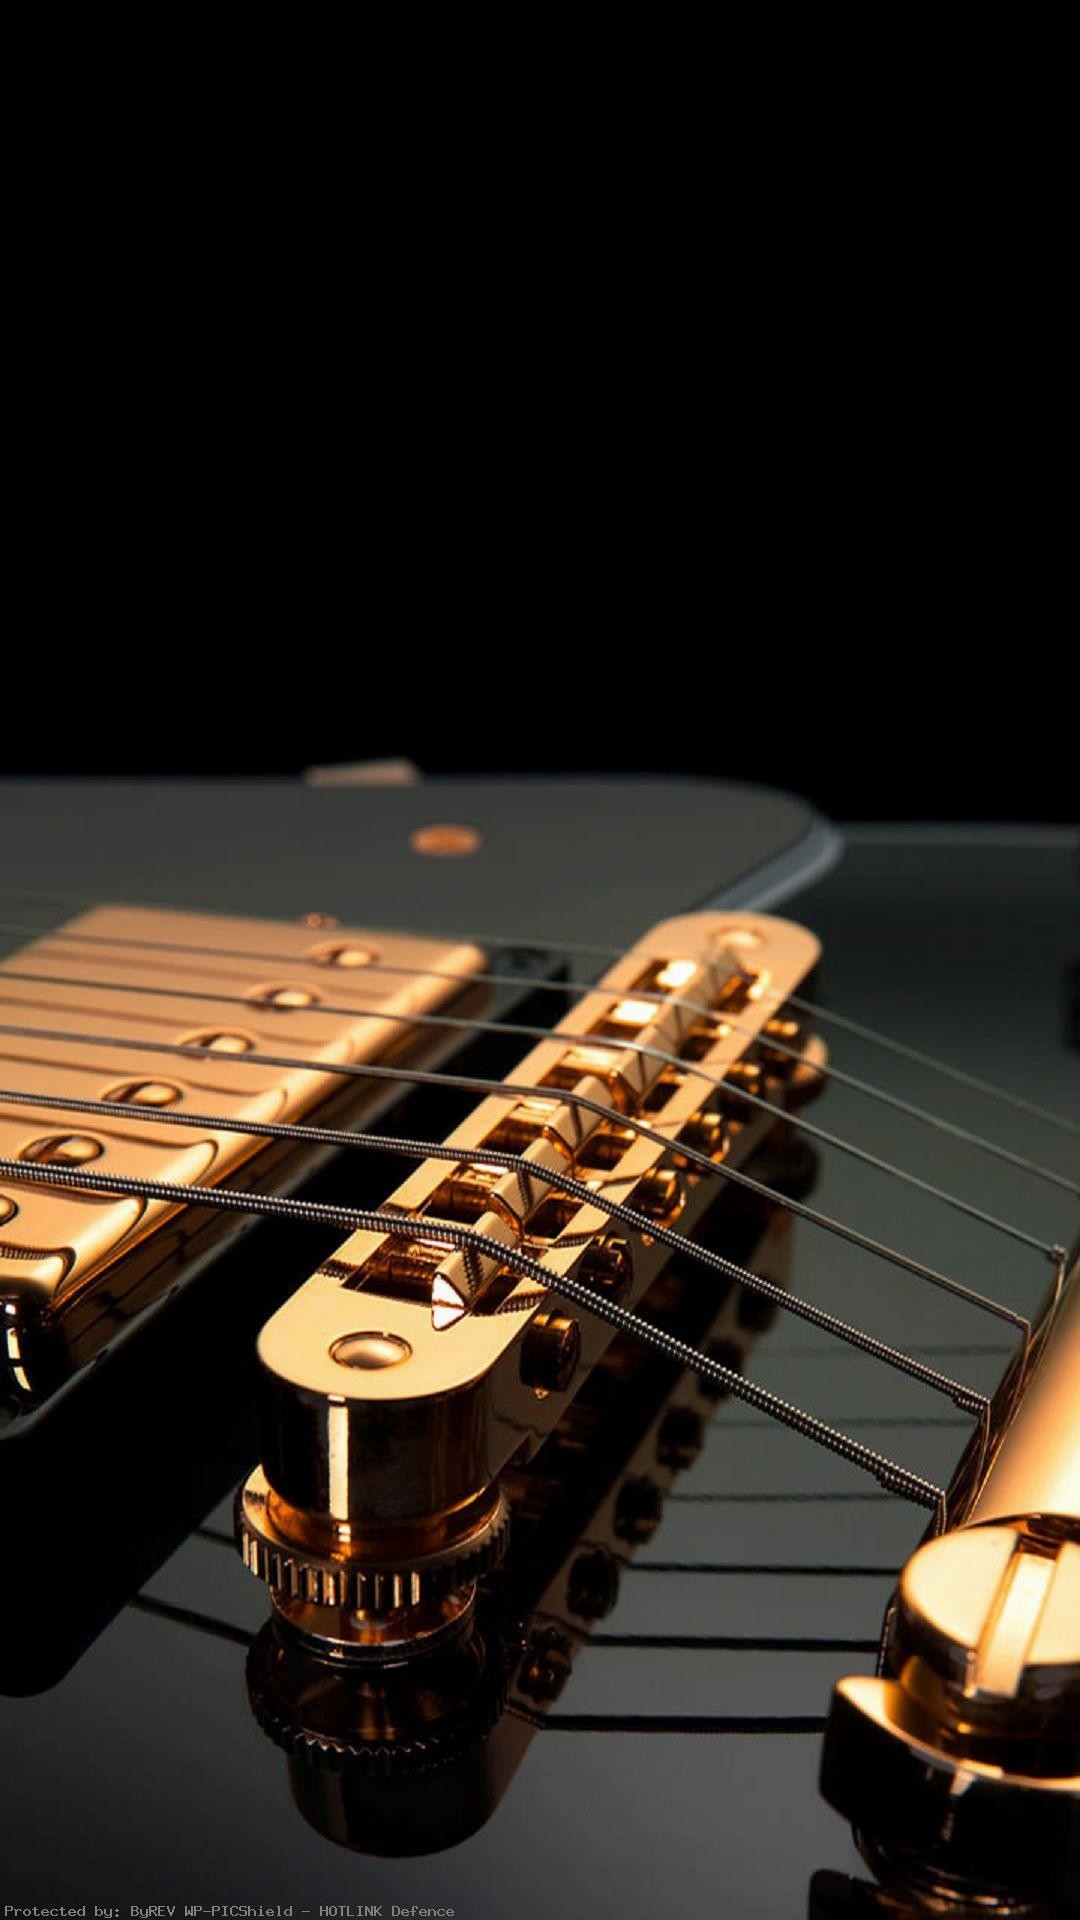 1080x1920 guitar-strings-black-gold-image-1080%C3%971920-